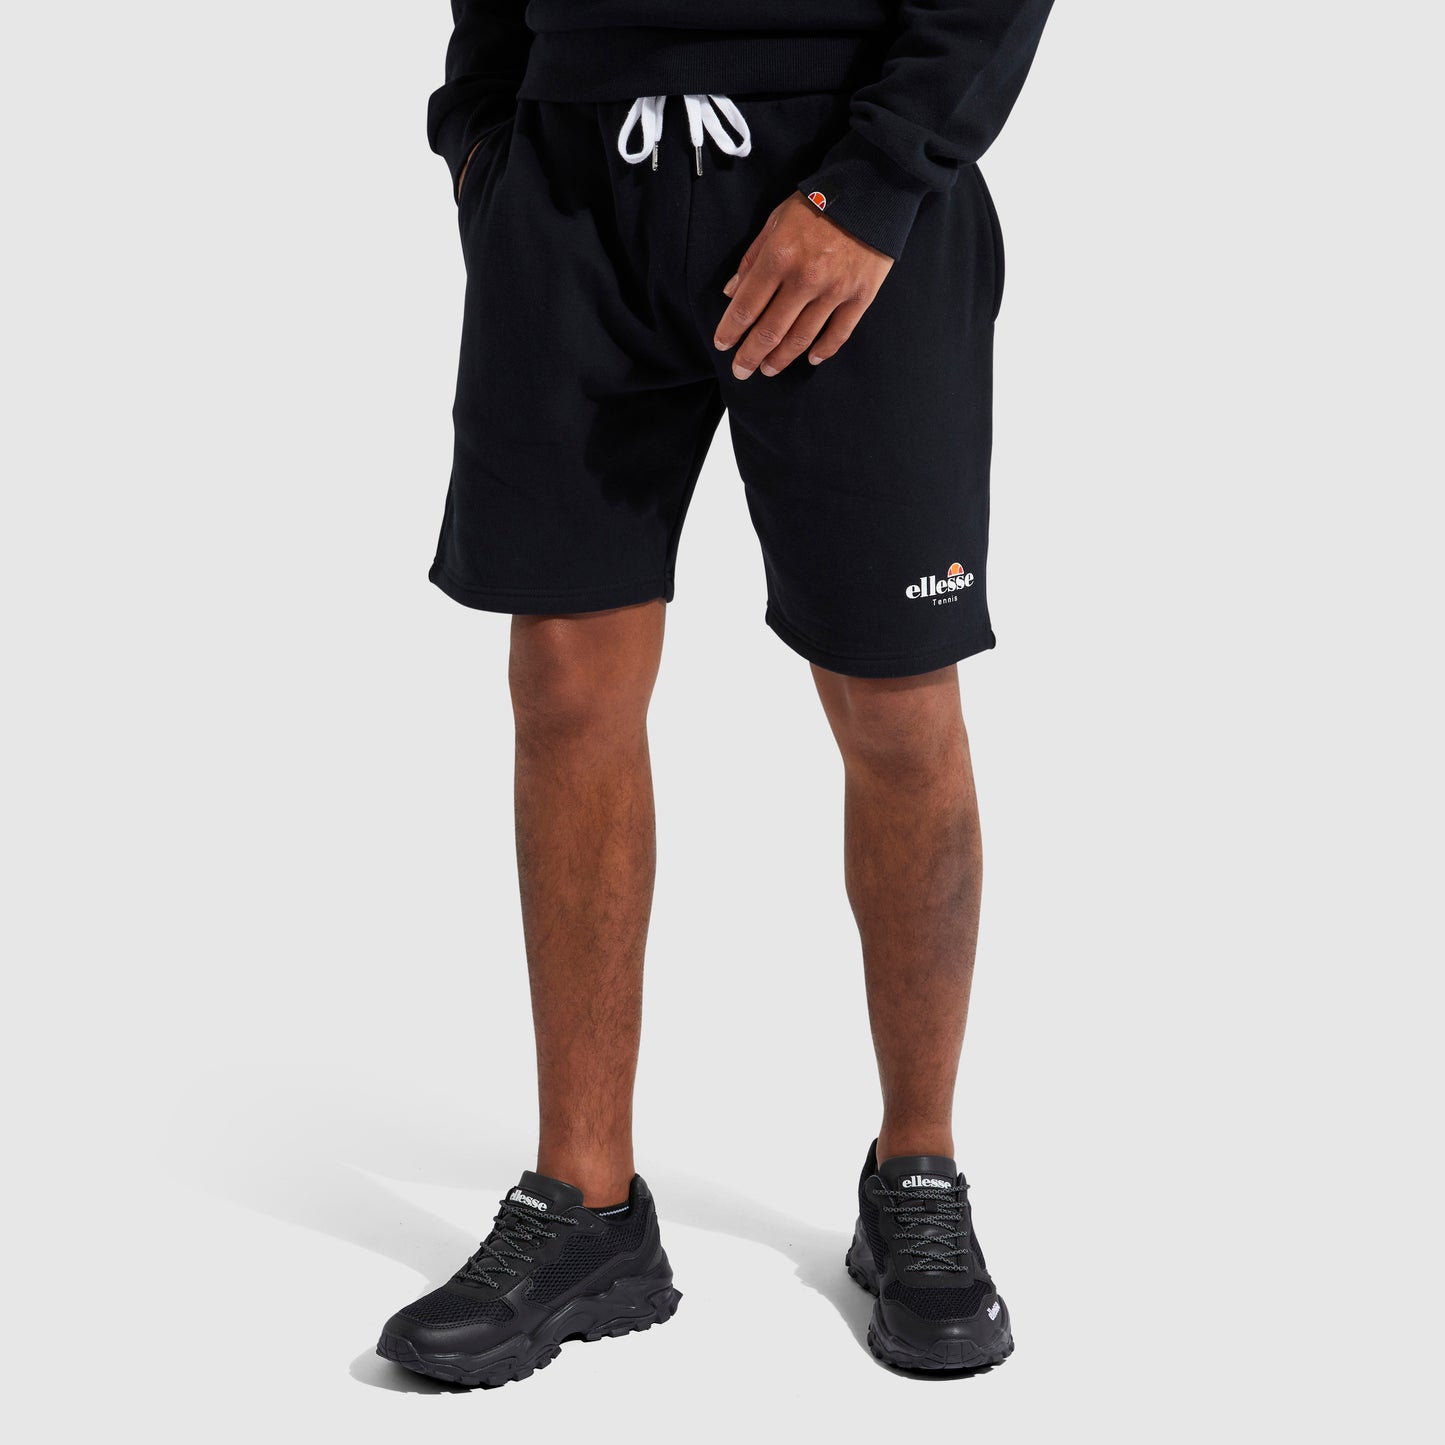 ellesse Brands – Men\'s NewCo Shorts Sweat Tennis